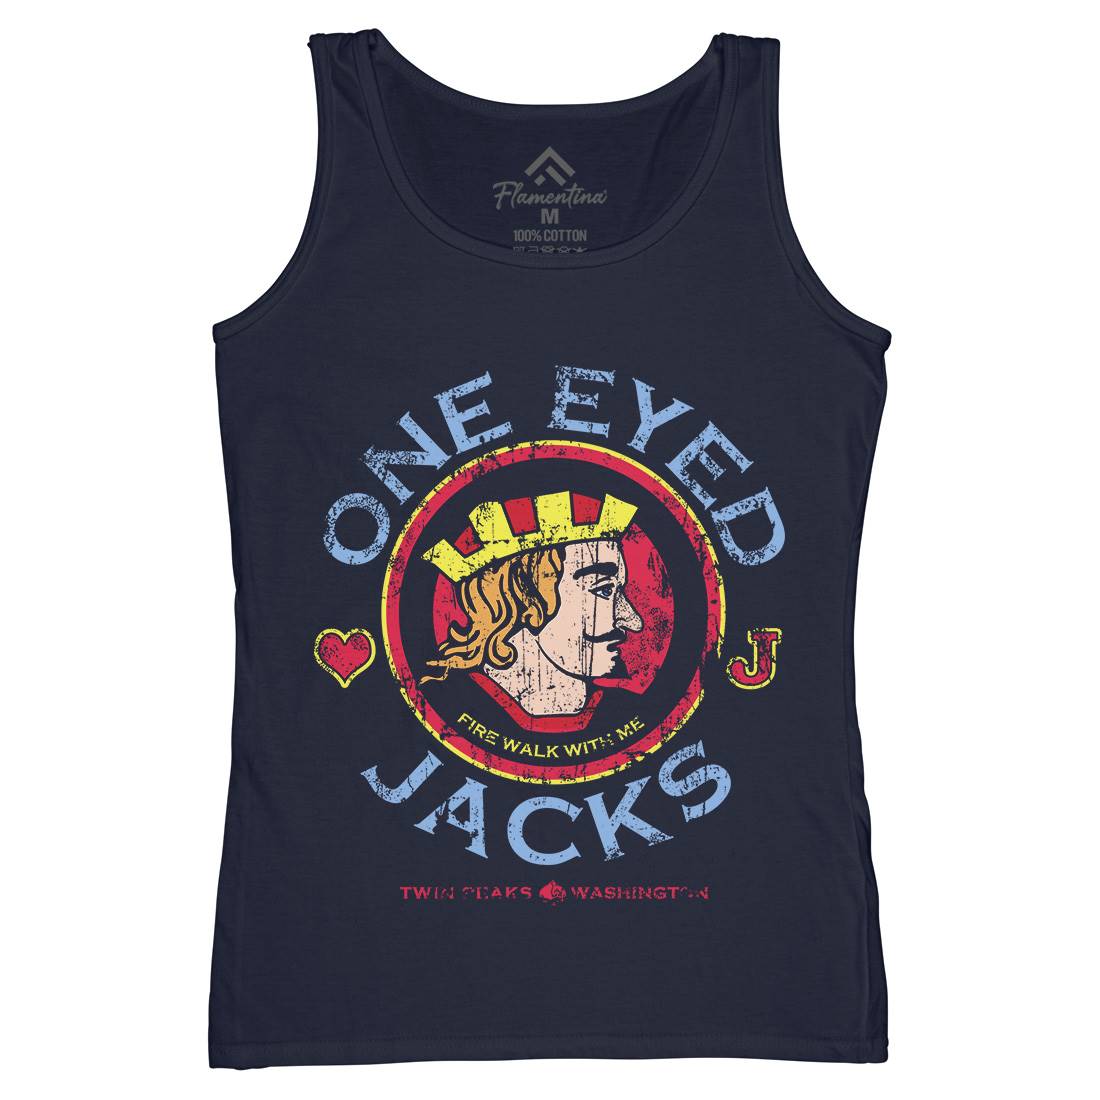 One Eyed Jacks Womens Organic Tank Top Vest Horror D296